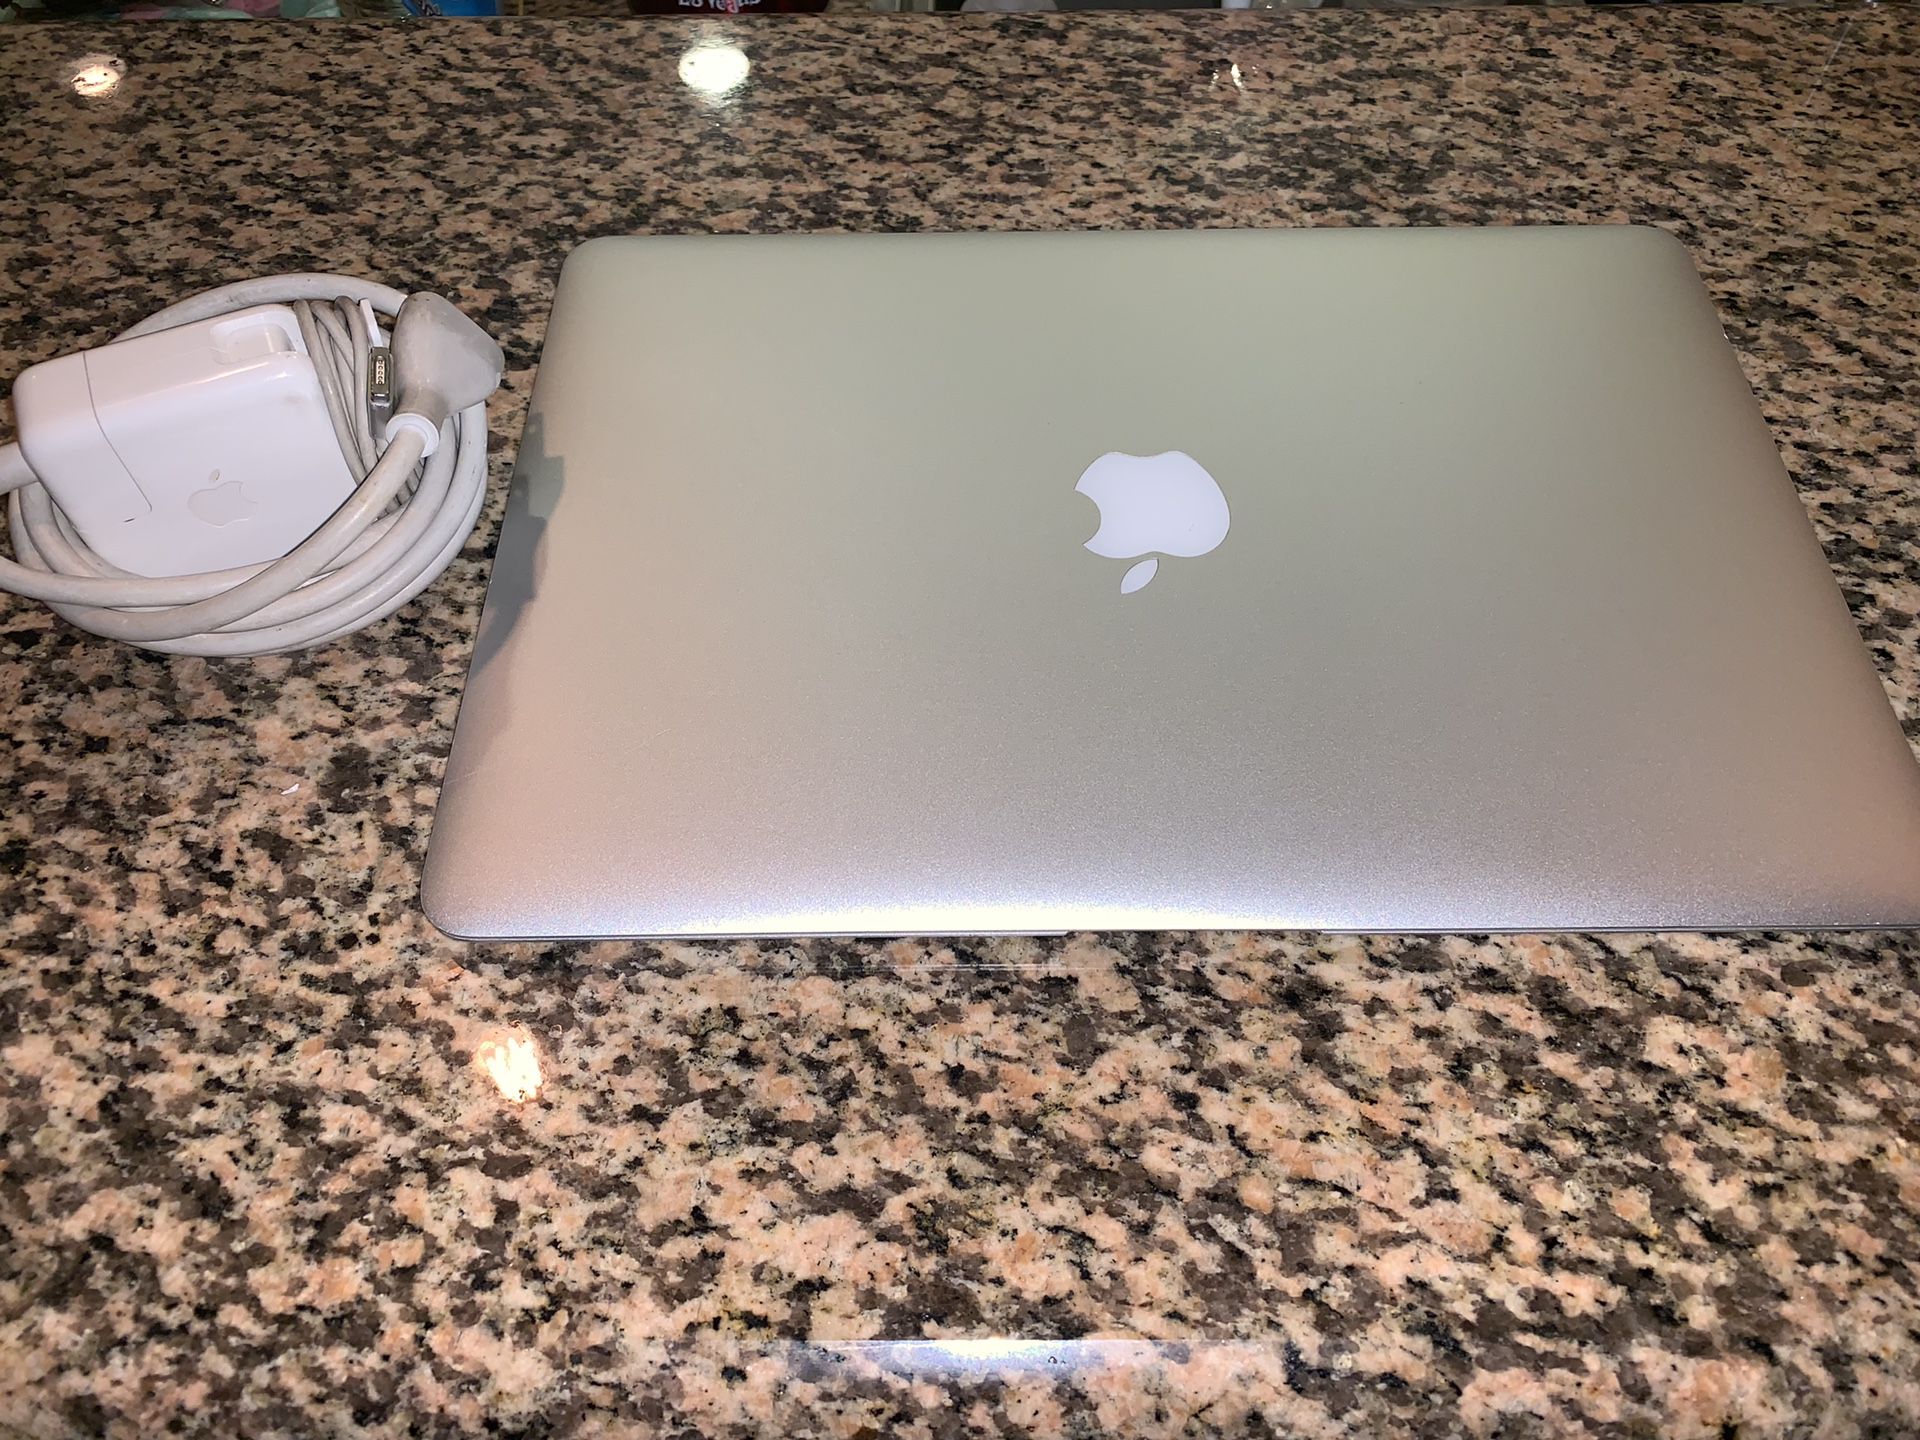 MacBook Air 13” 128gb - Early 2014